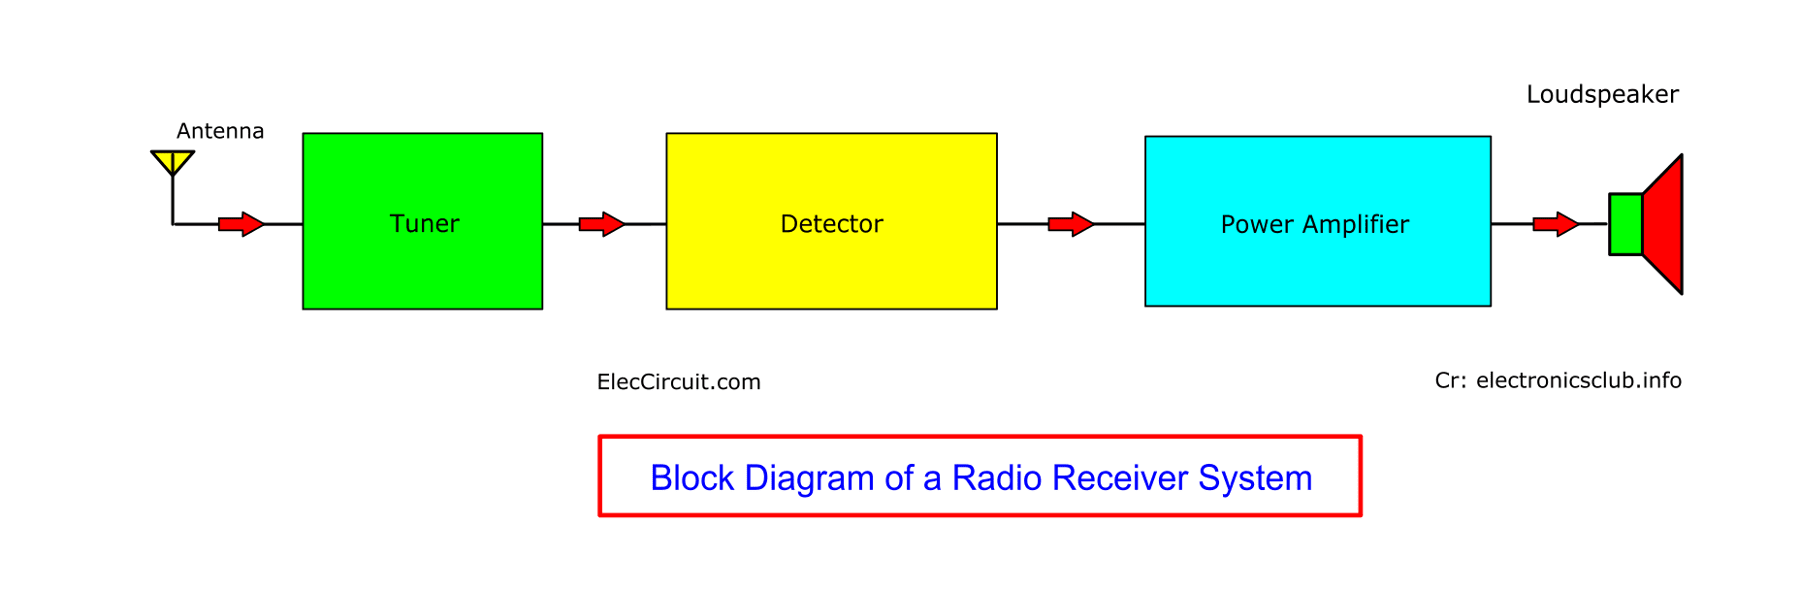 Understanding Electronics Block Diagrams With Example Eleccircuit Com